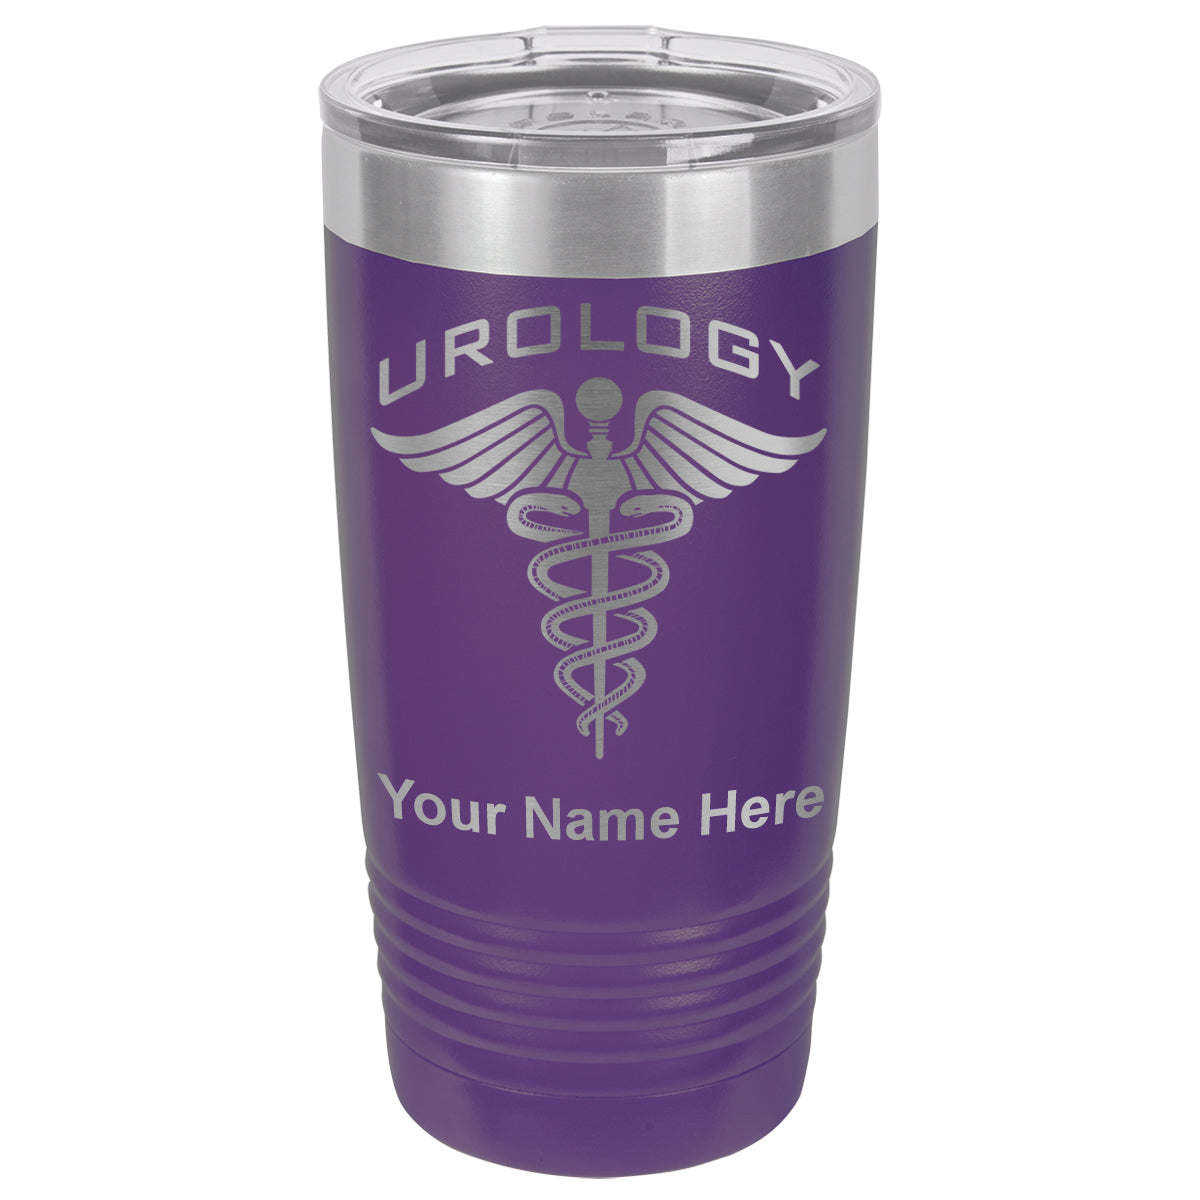 20oz Vacuum Insulated Tumbler Mug, Urology, Personalized Engraving Included